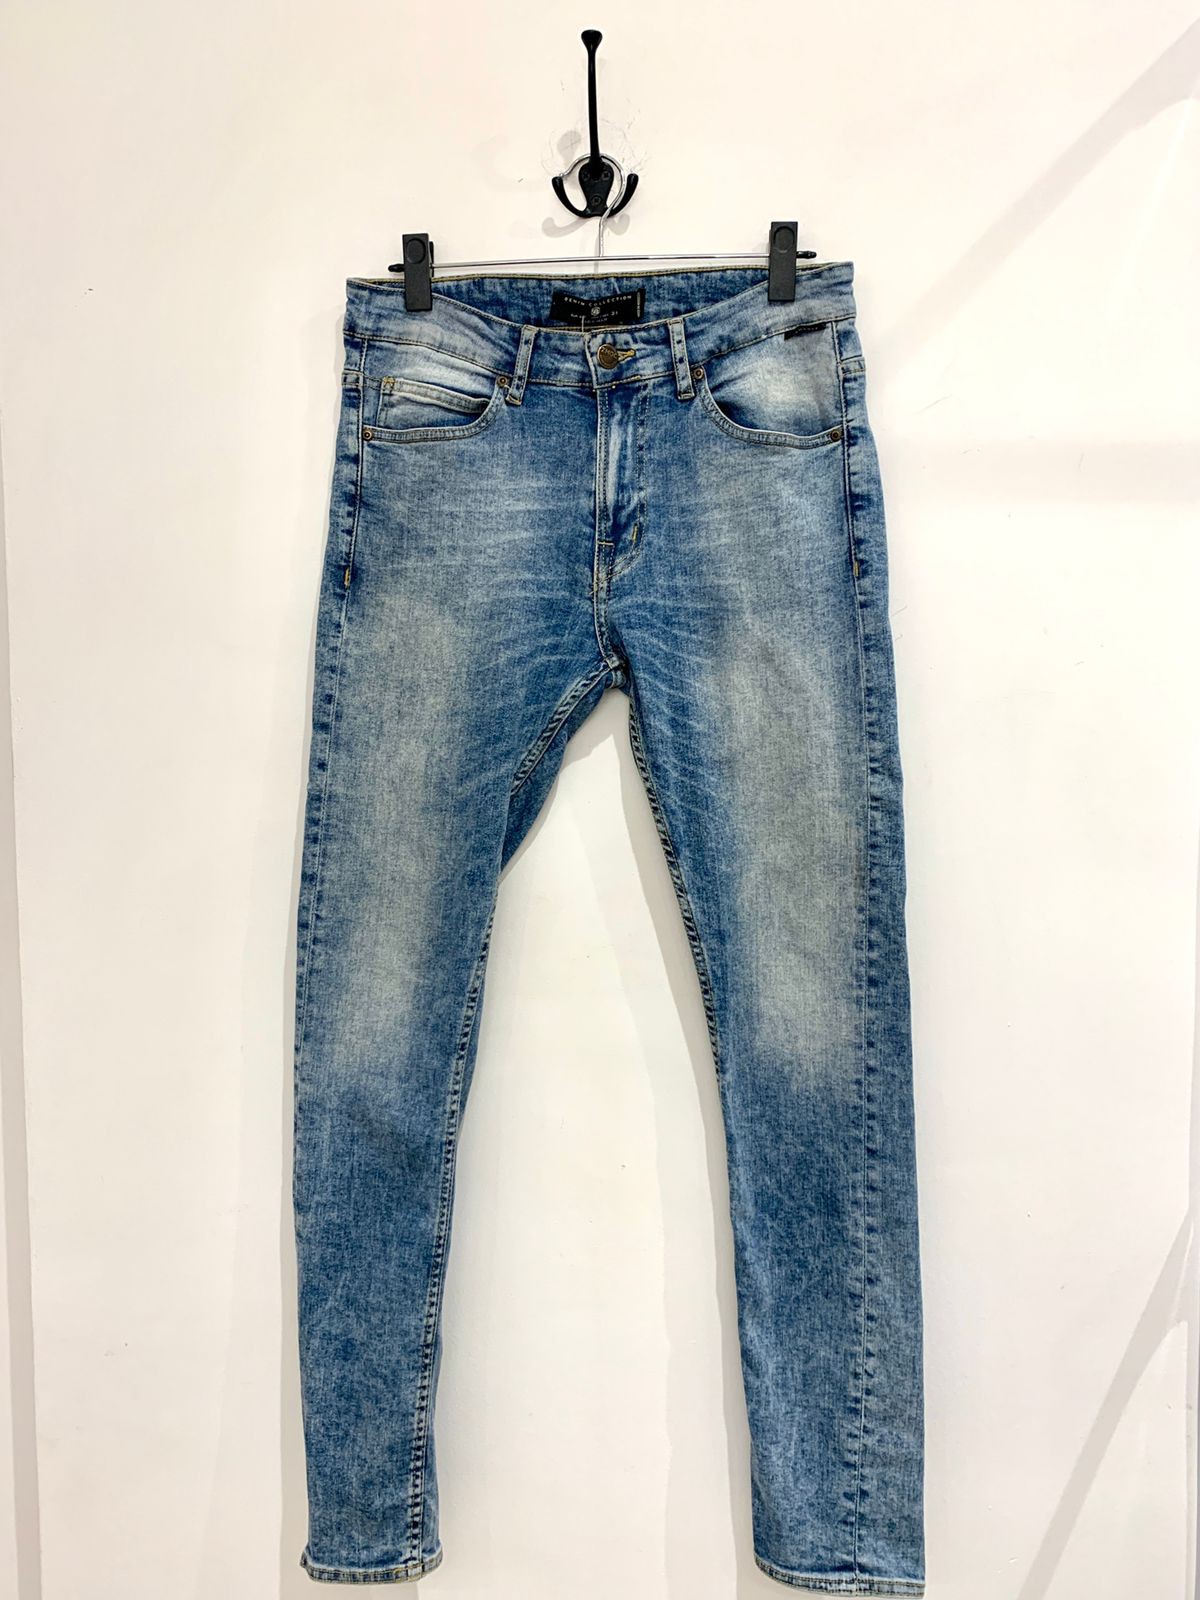 ZARA MAN Calça jeans masculina estonada clara 40 - Second Hand / Brecho